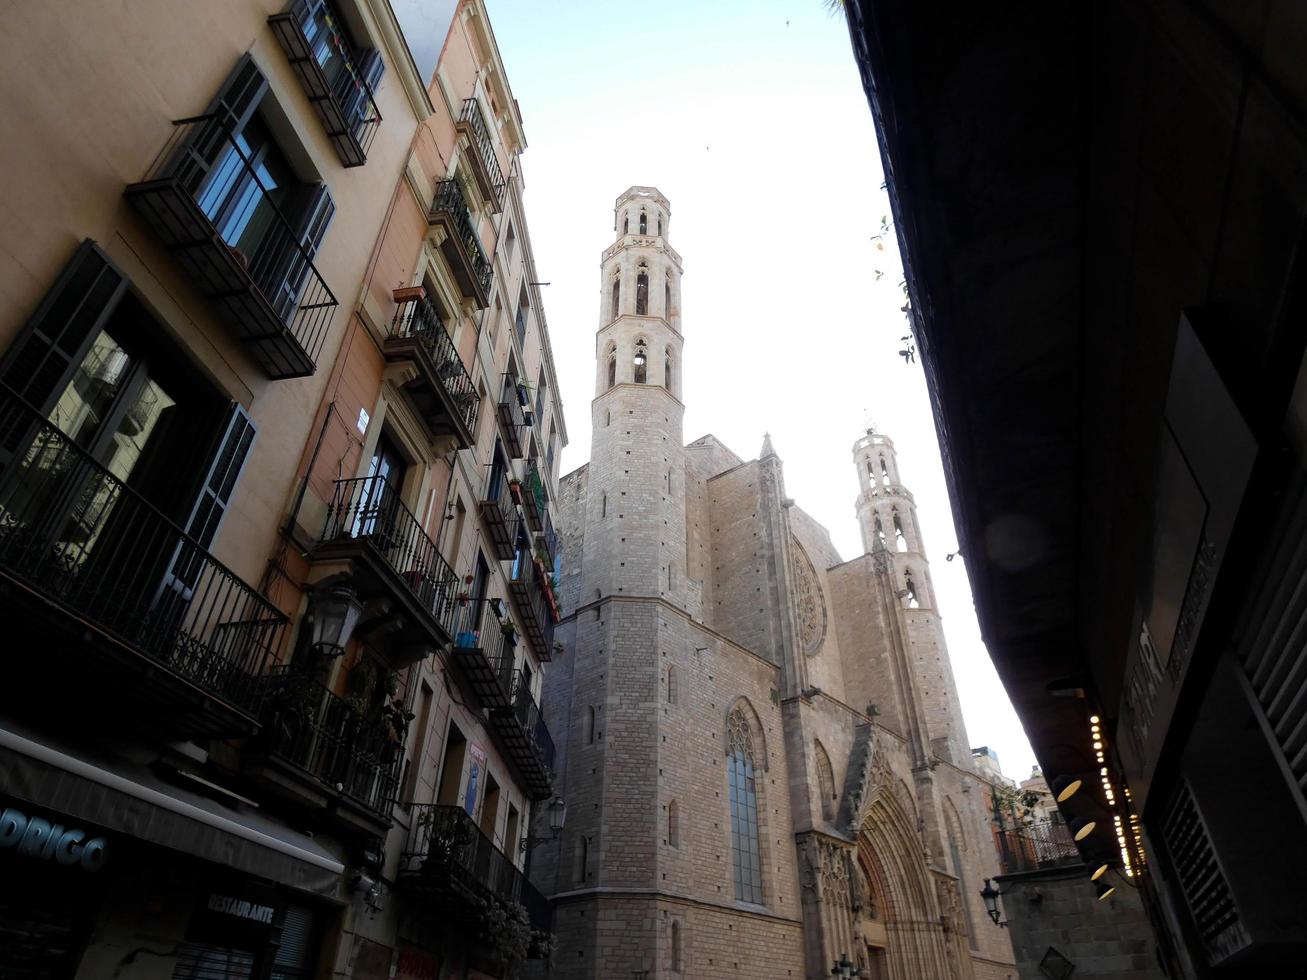 gotische kirche von santa maria del mar in barcelona foto